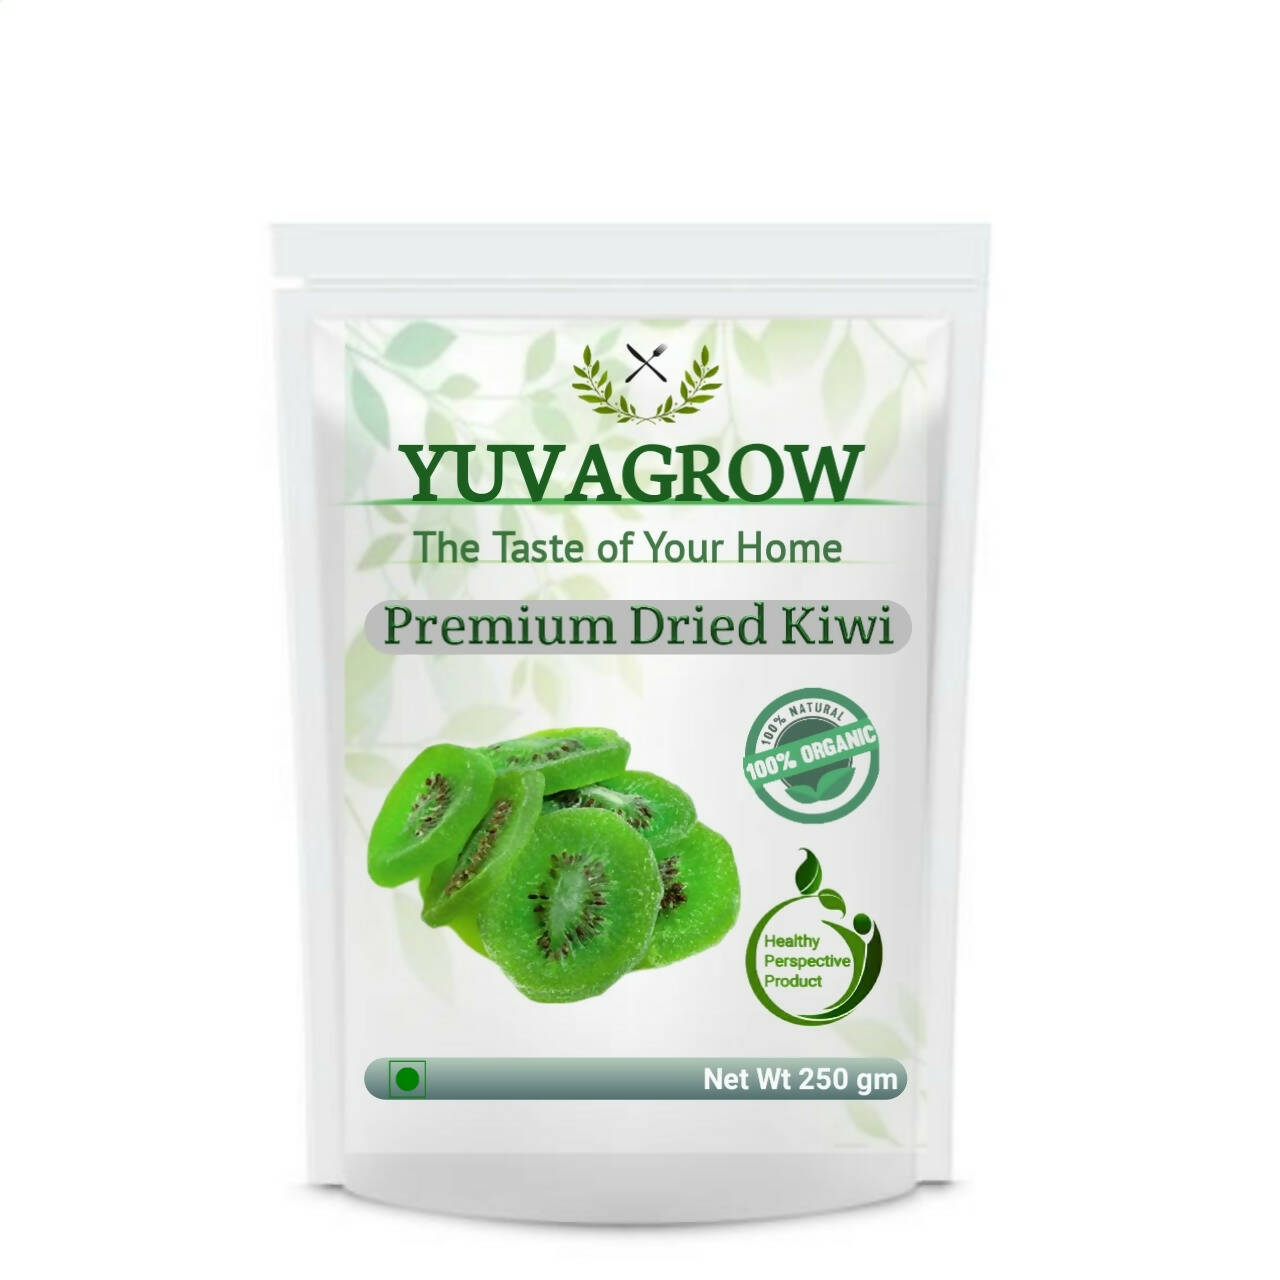 Yuvagrow Premium Dried kiwi Slices - buy in USA, Australia, Canada